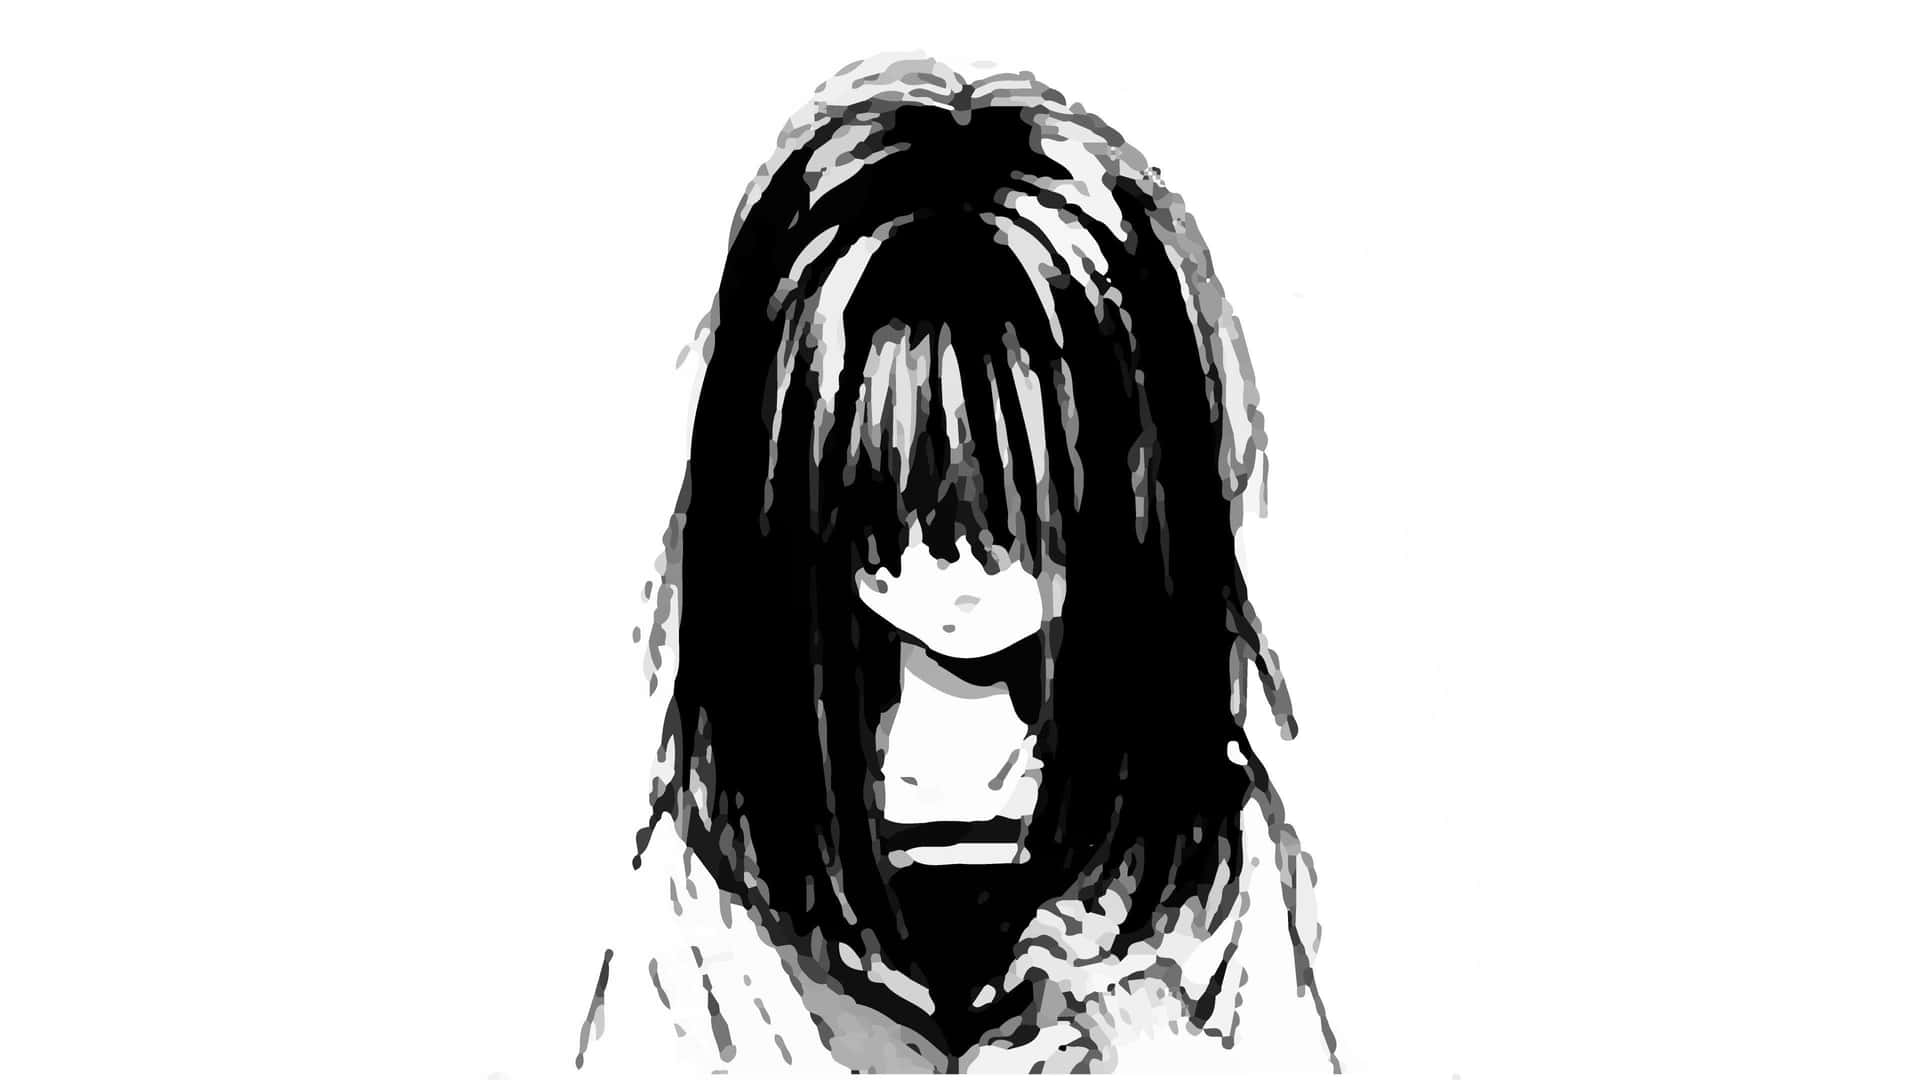 Depressed Girl In Black And White Anime Pfp Wallpaper